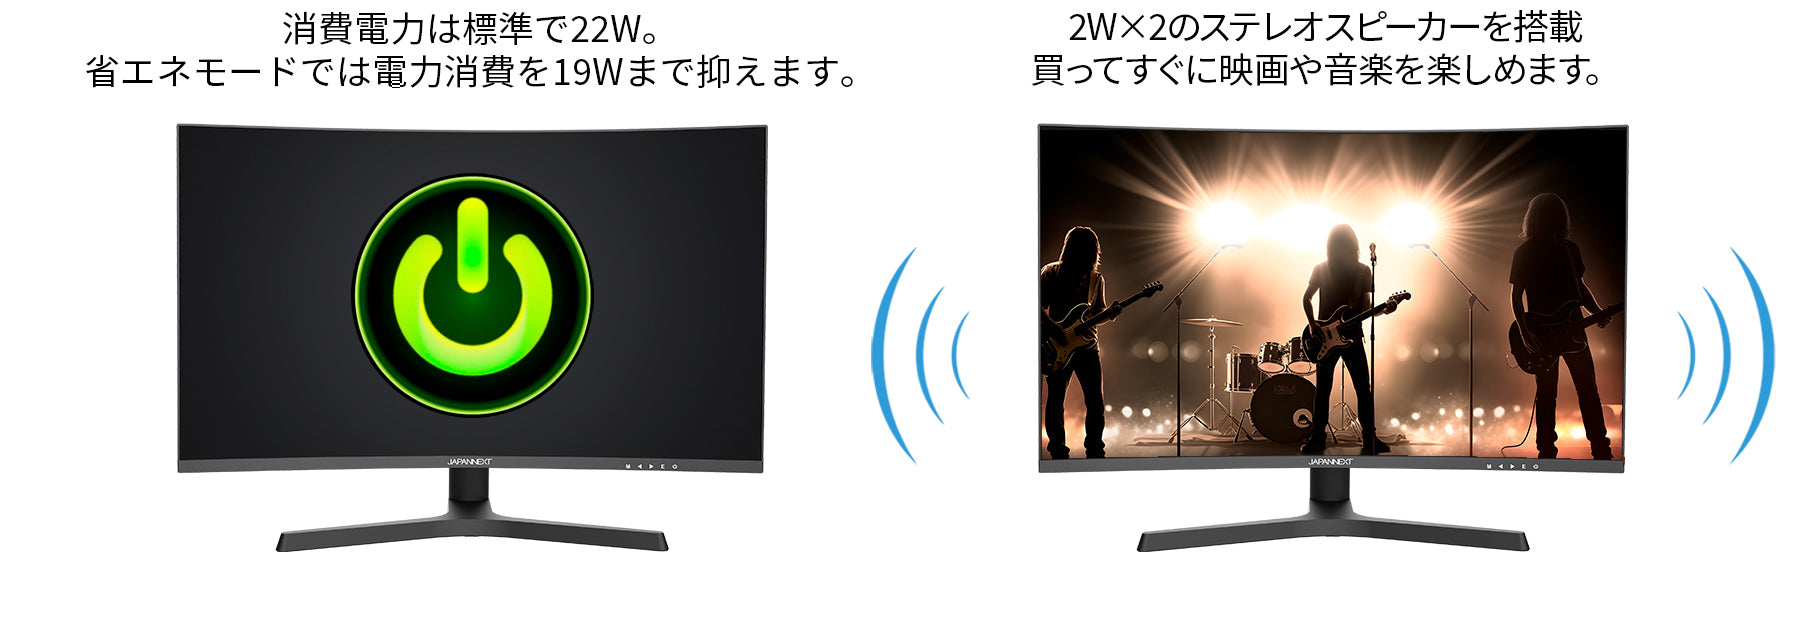 JAPANNEXT 27インチ 曲面 Full HD(1920x1080) 240Hz 液晶モニター JN